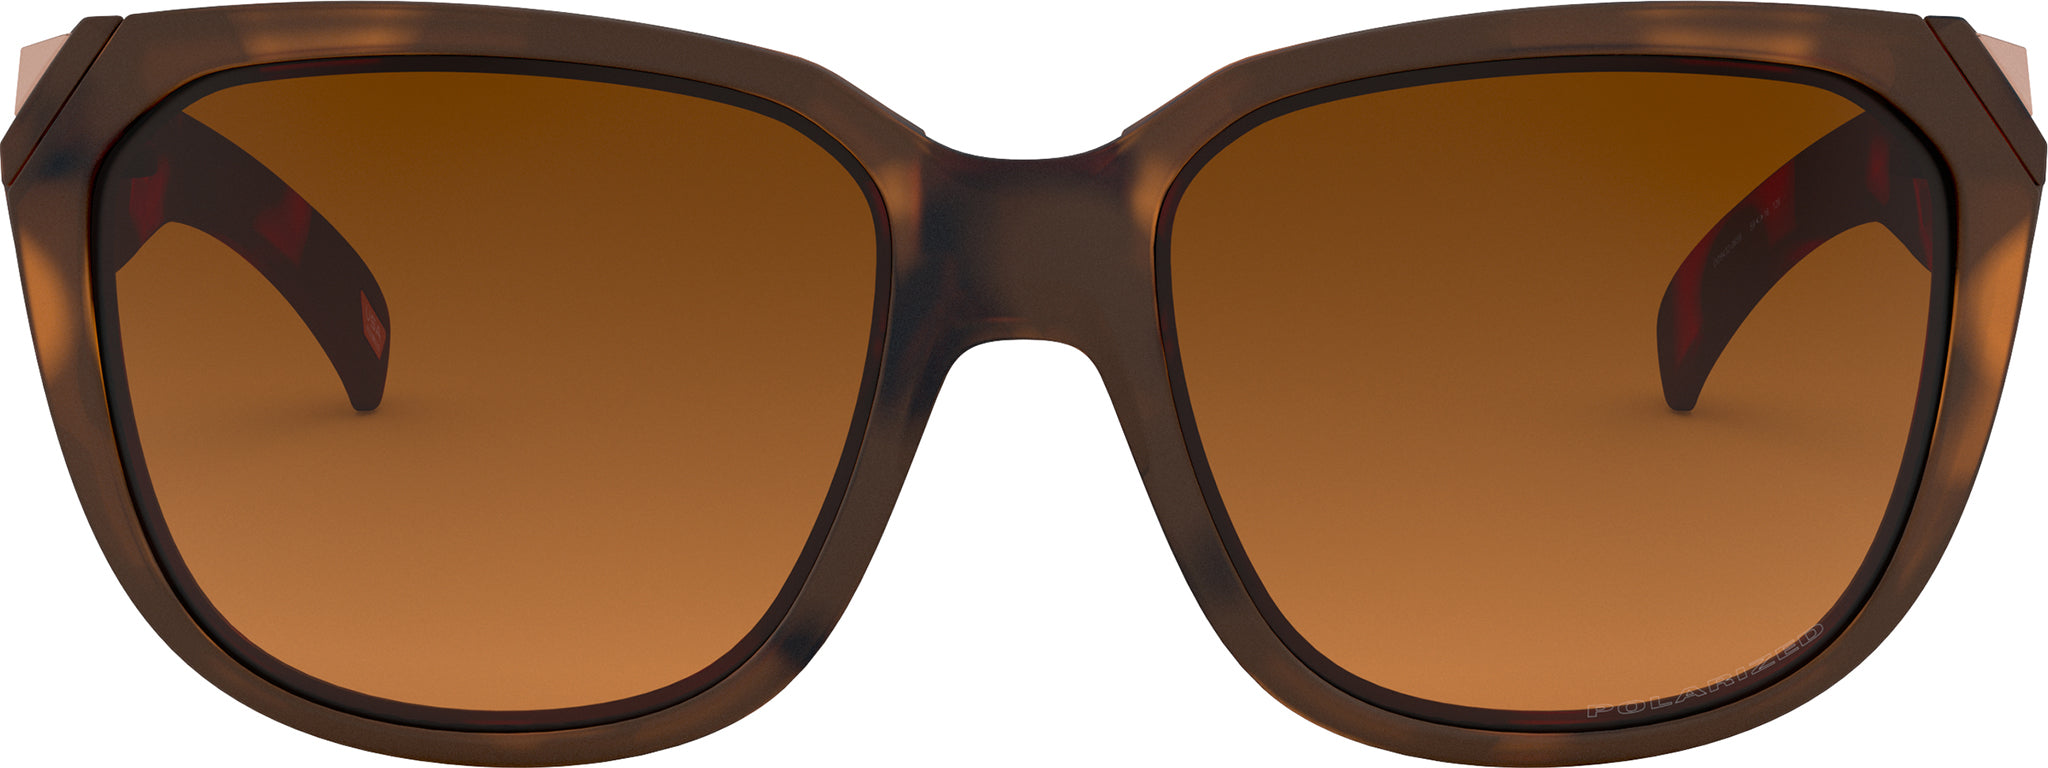 Oakley Rev Up - Matte Brown Tortoise - Brown Gradient Polarized Lens  Sunglasses - Women's | The Last Hunt